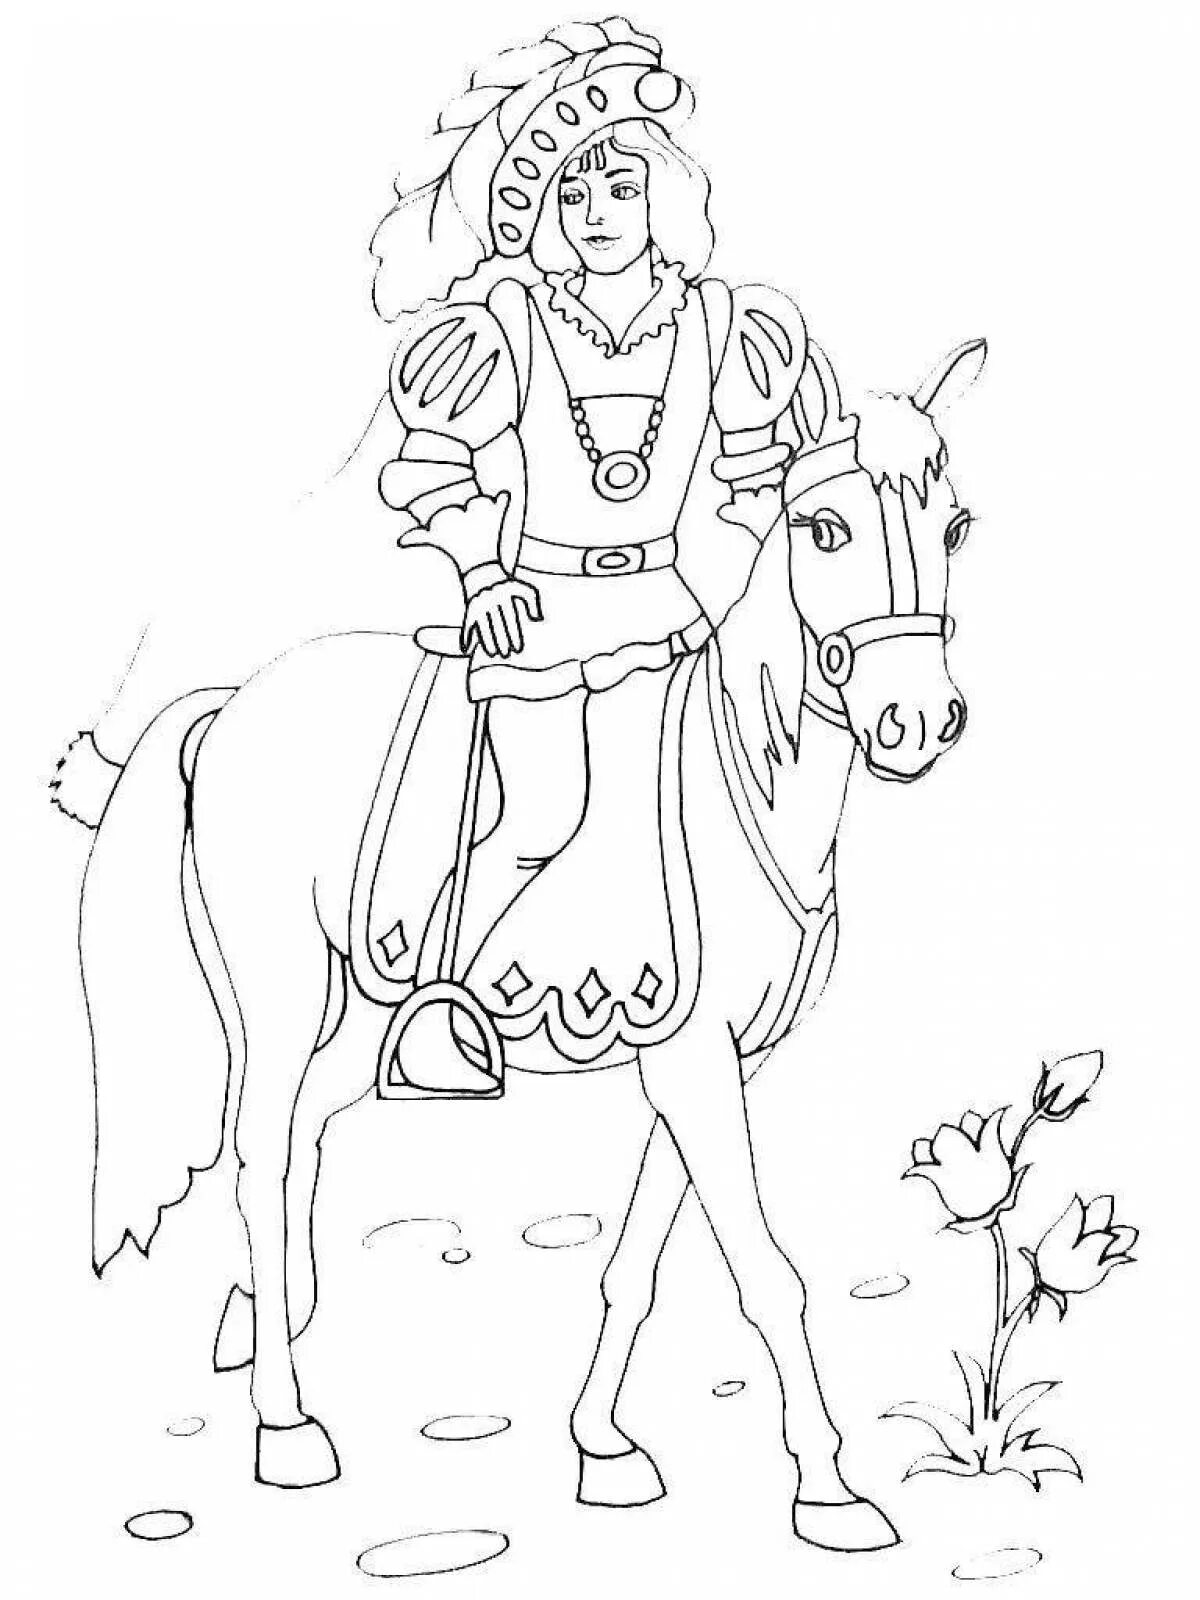 Принц на лошади раскраска. Царевич раскраска для детей. Принцесса на коне раскраска. Принц на коне раскраска.